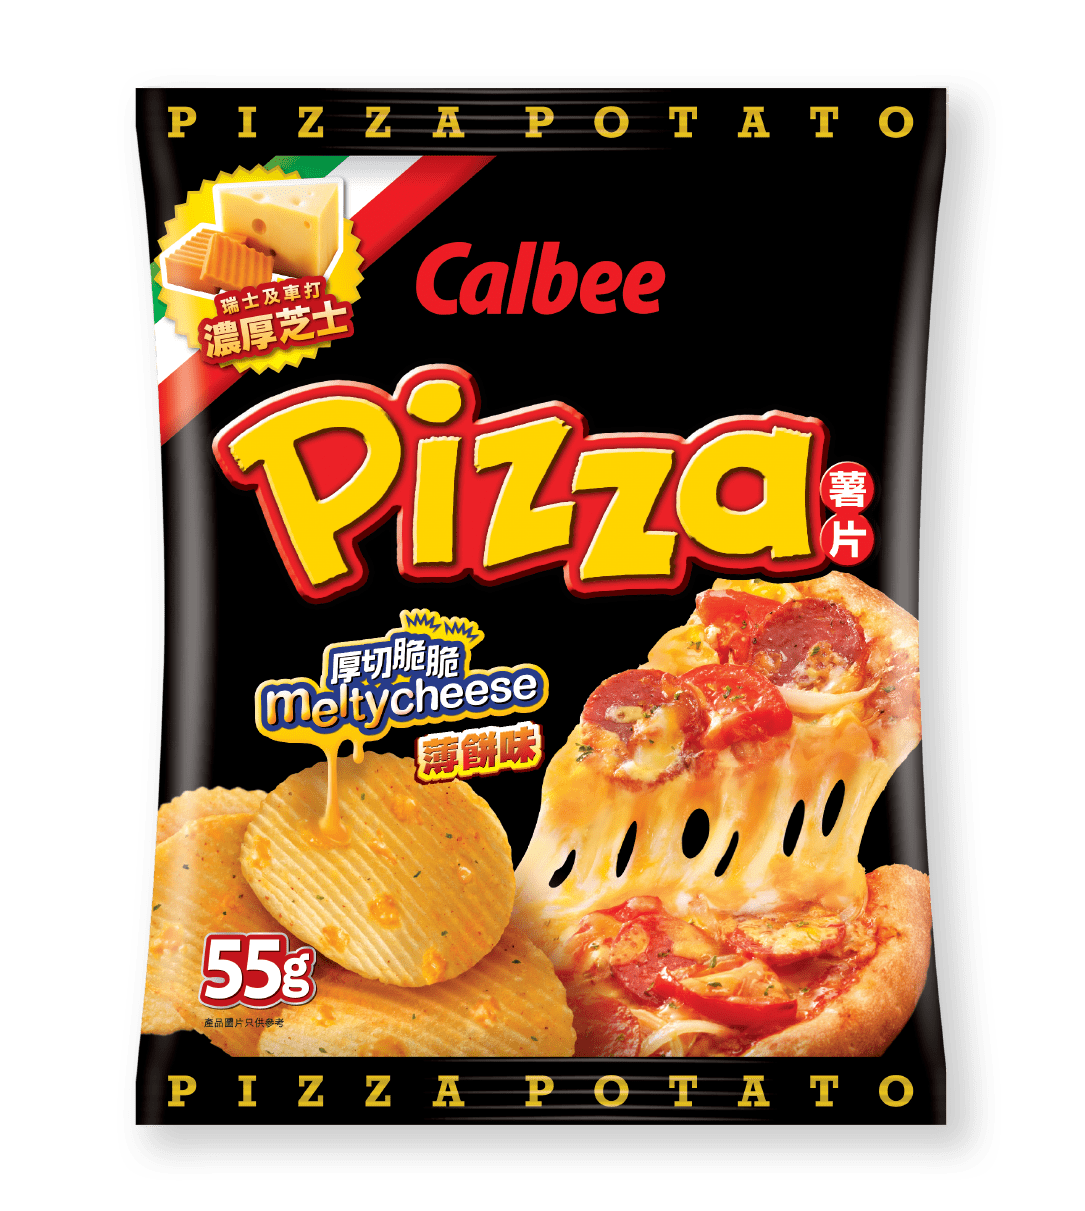 Calbee Australia - World Foods - Potato Chips - Pizza